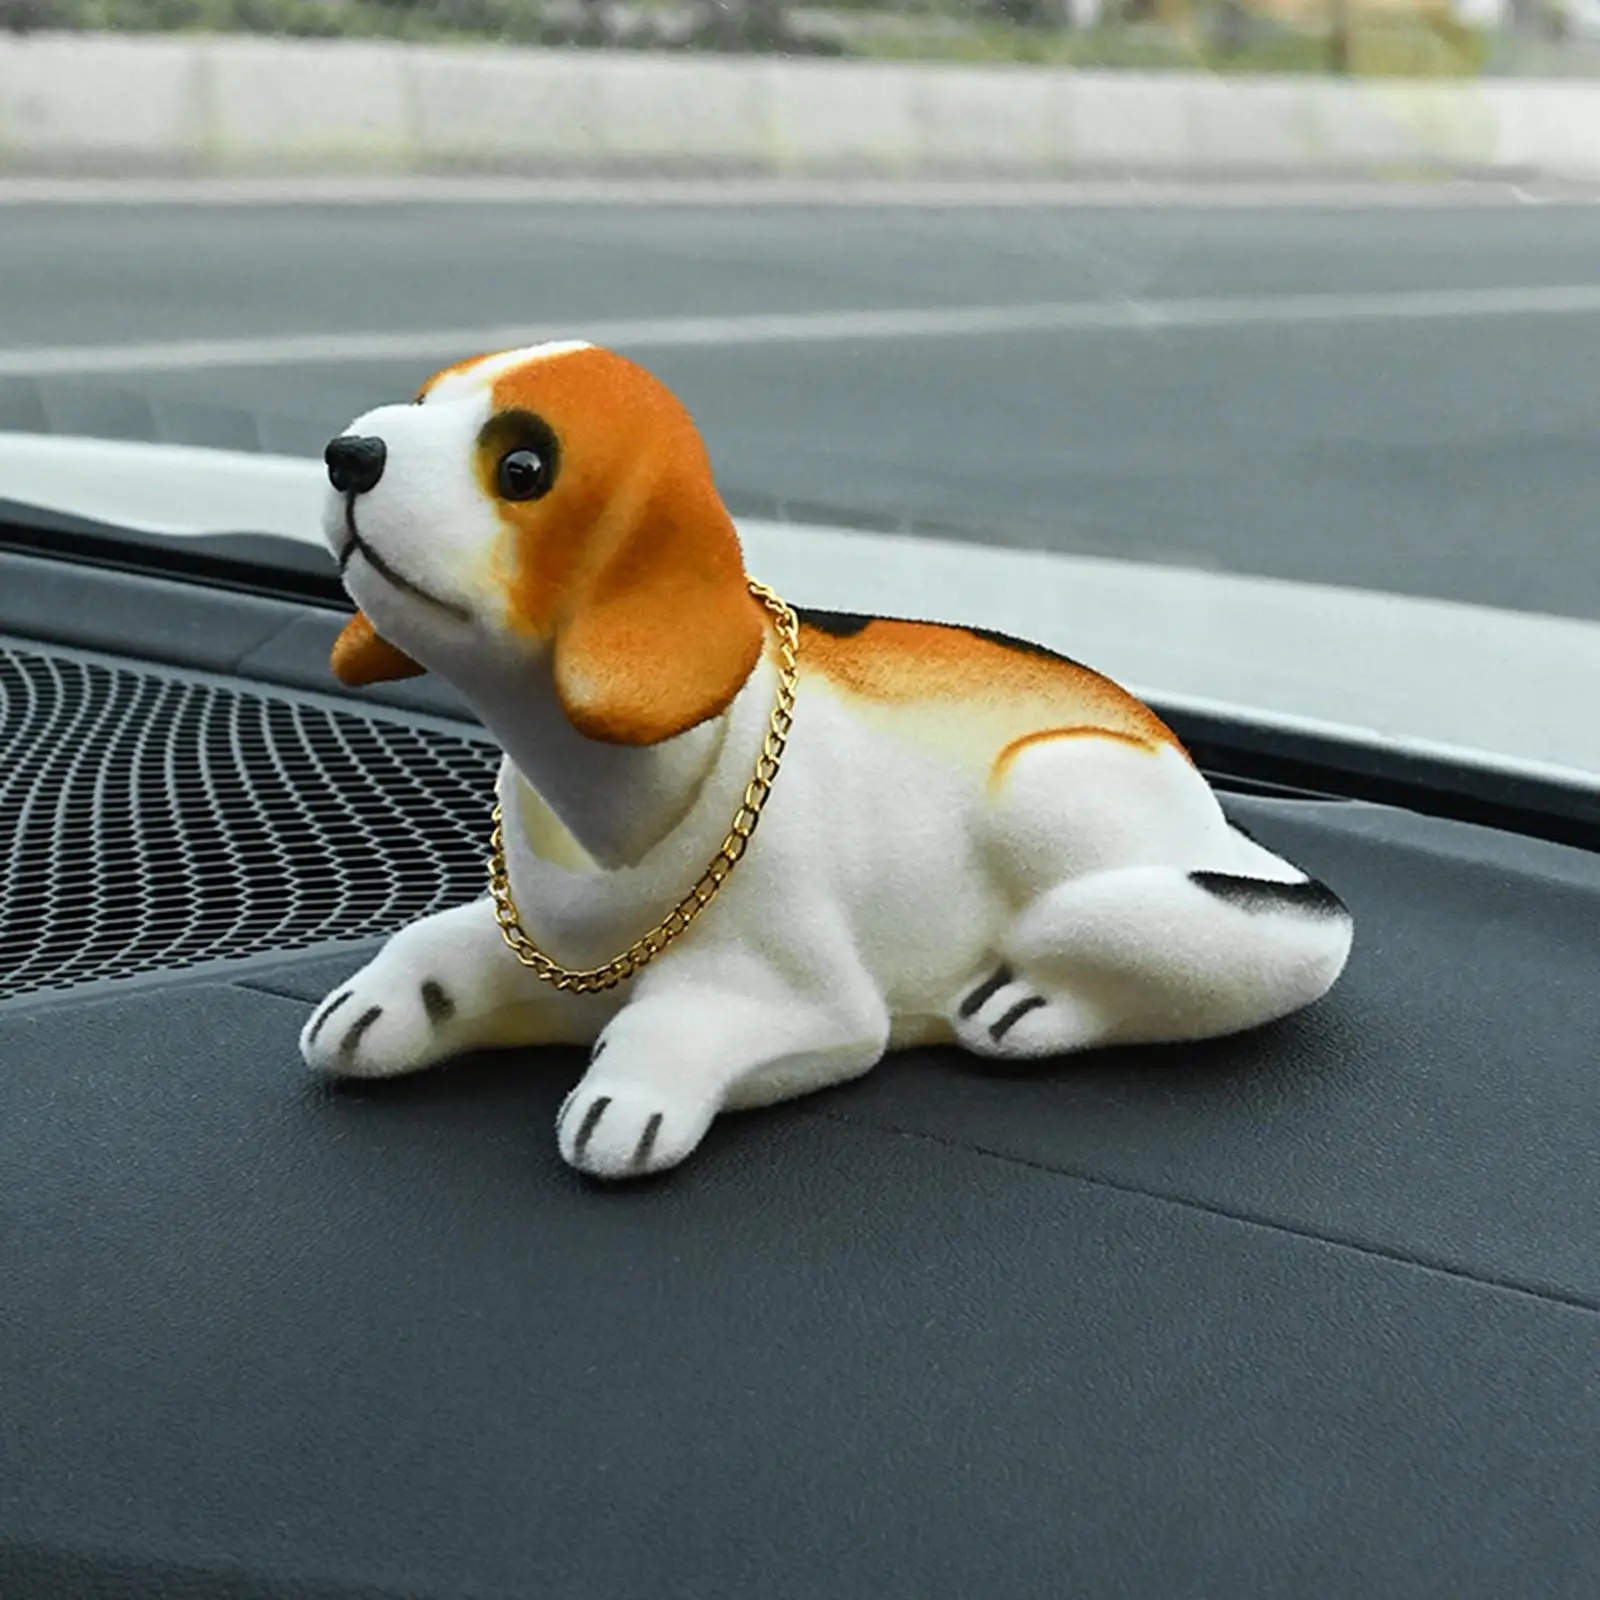 Dashboard Head Dogs Nodding Heads Car Dashboard Ornaments Puppy for Car Vehicle Interior Decoration